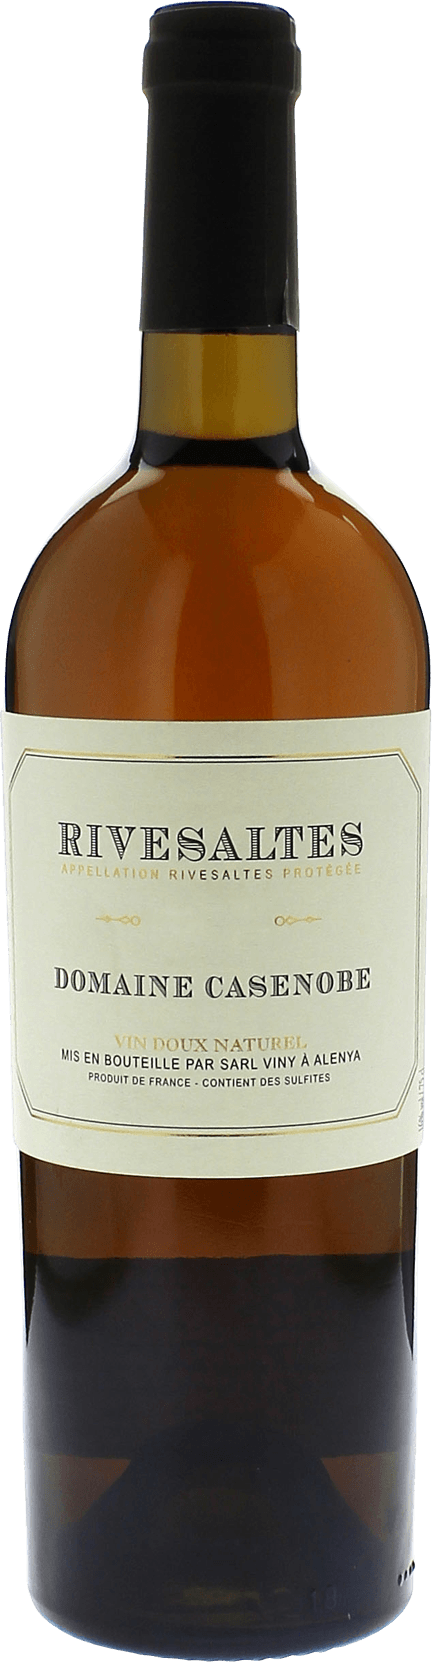 Rivesaltes domaine casenobe 1974 Vin doux naturel Rivesaltes, Vin doux naturel